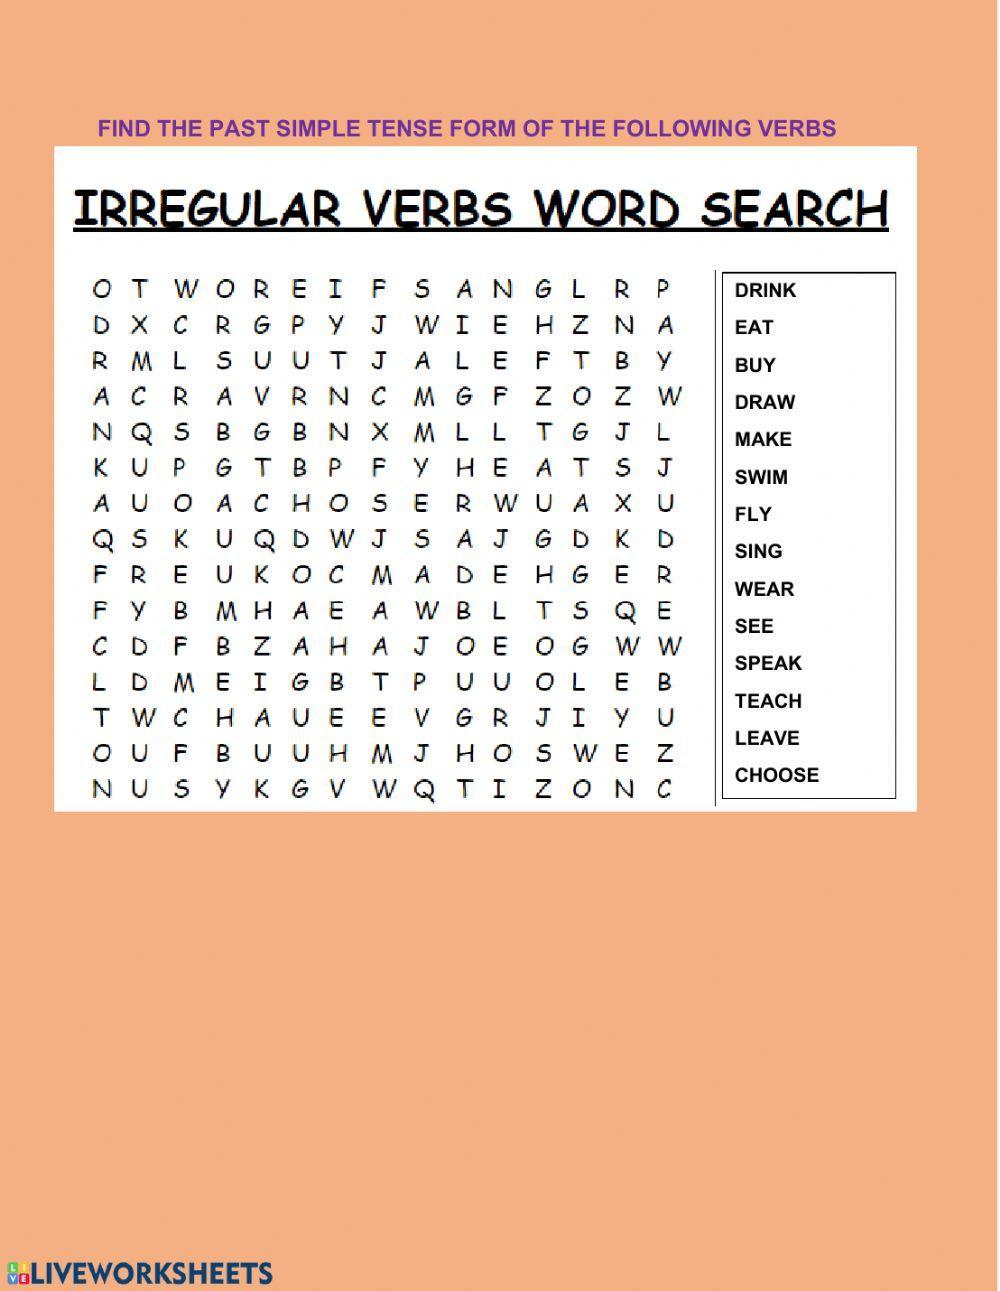 Irregular verbs word search